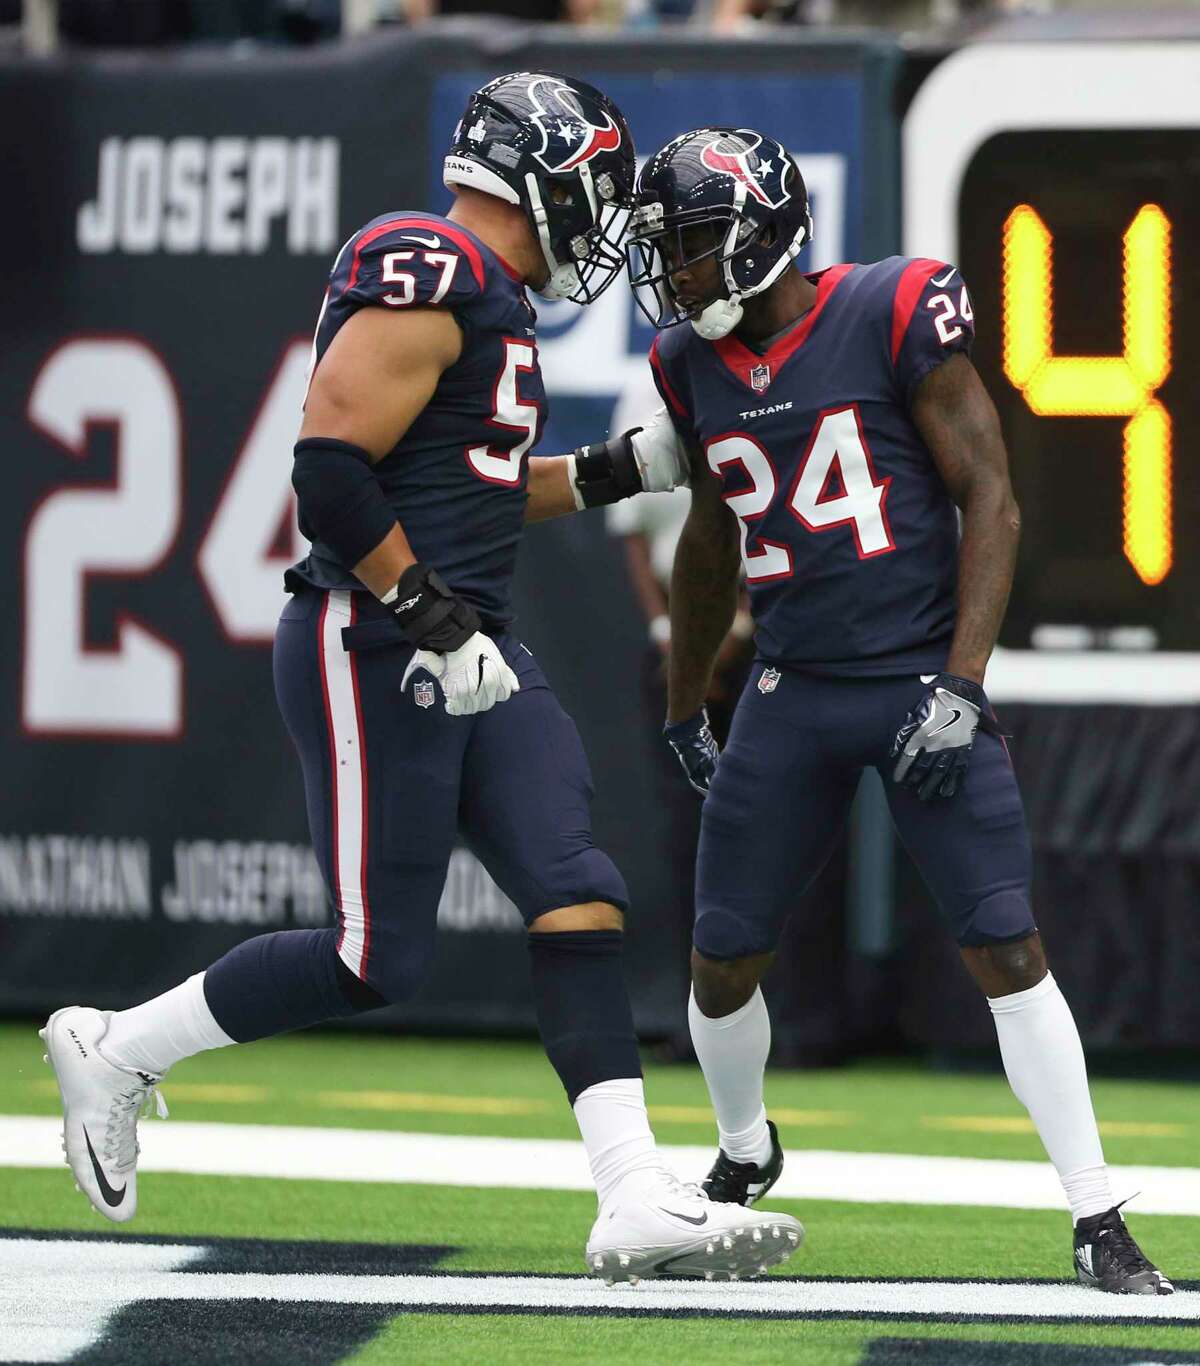 Houston Texans cornerback Johnathan Joseph (24) and linebacker Brennan Scarlett (57) celebrate Joseph's interception and touchdown during the second quarter of an NFL football game at NRG Stadium on Sunday, Oct. 15, 2017, in Houston.